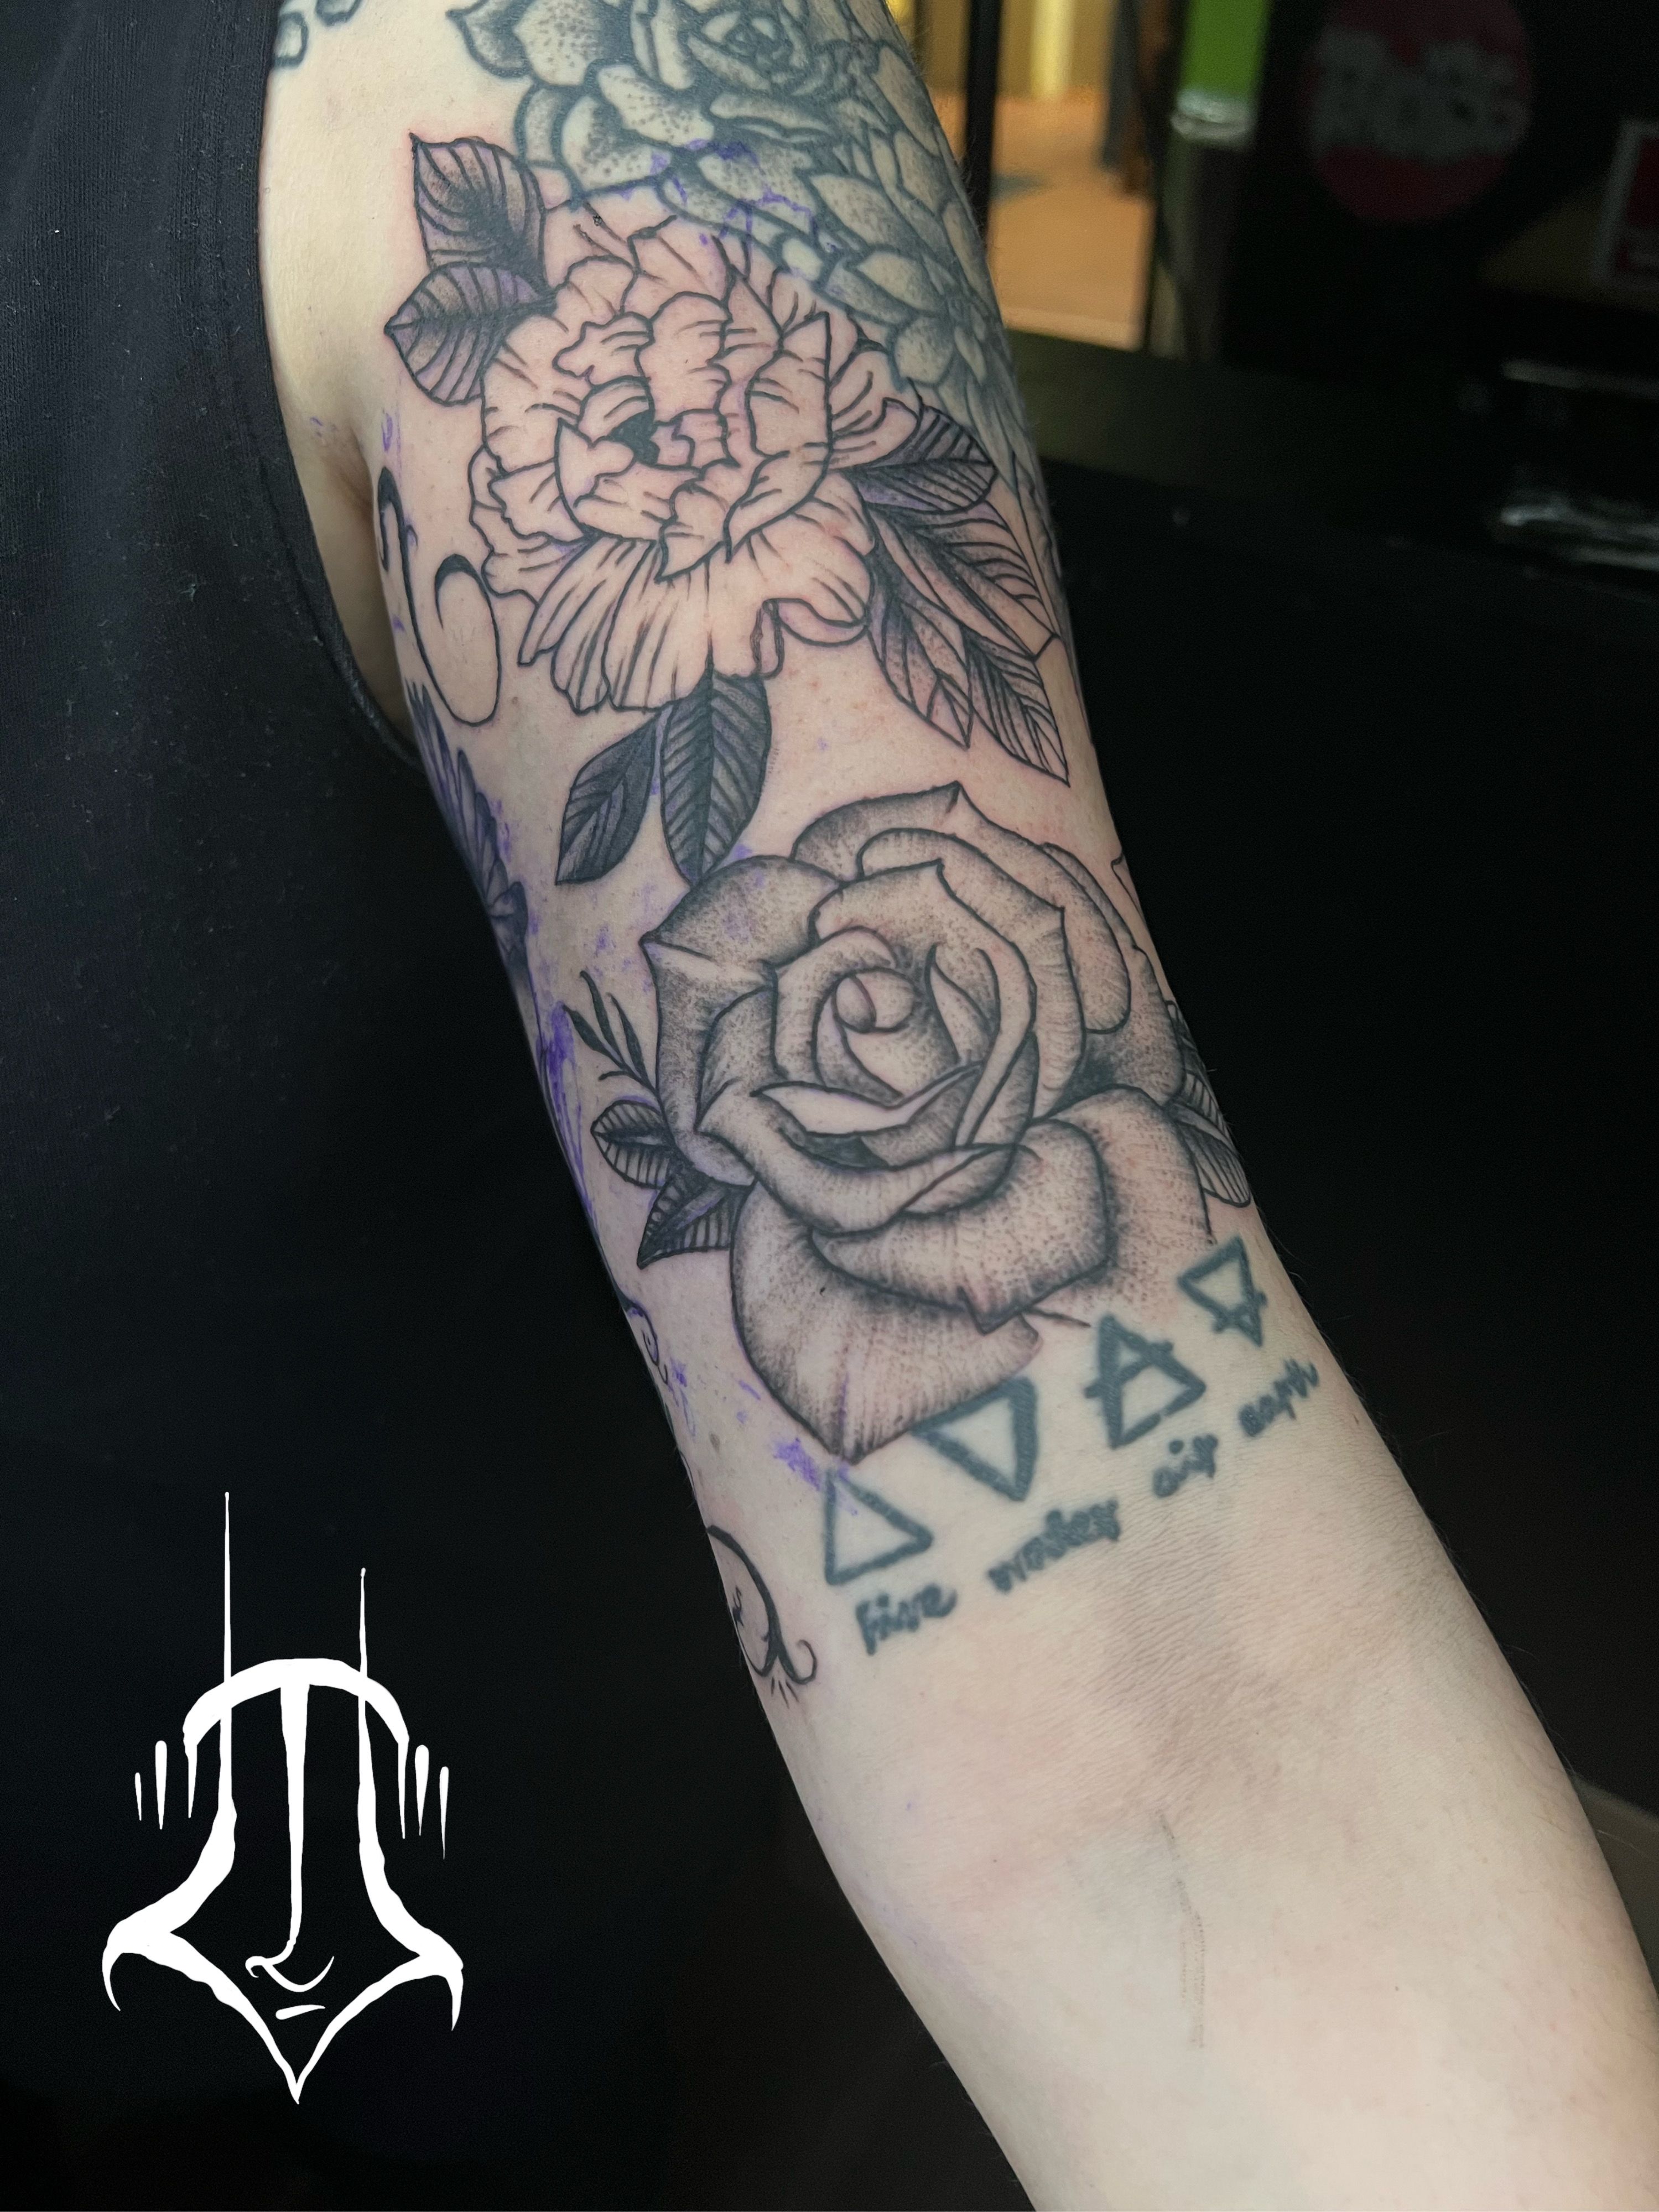 Amanda Hierstetter - Owner - Dark Arts Tattoo Studio | LinkedIn